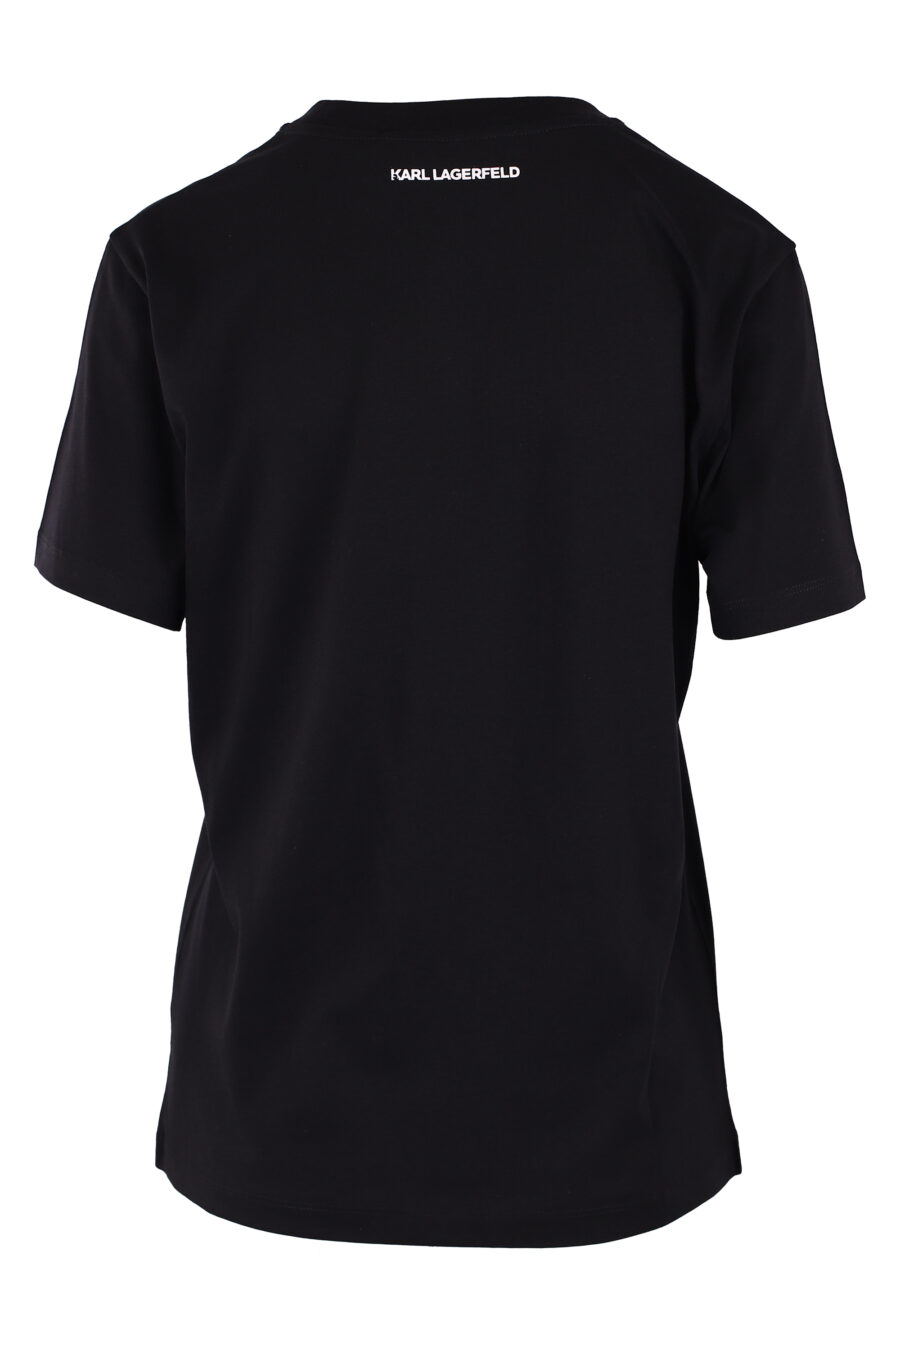 Camiseta negra con logo monograma dorado y "karl" - IMG 6261